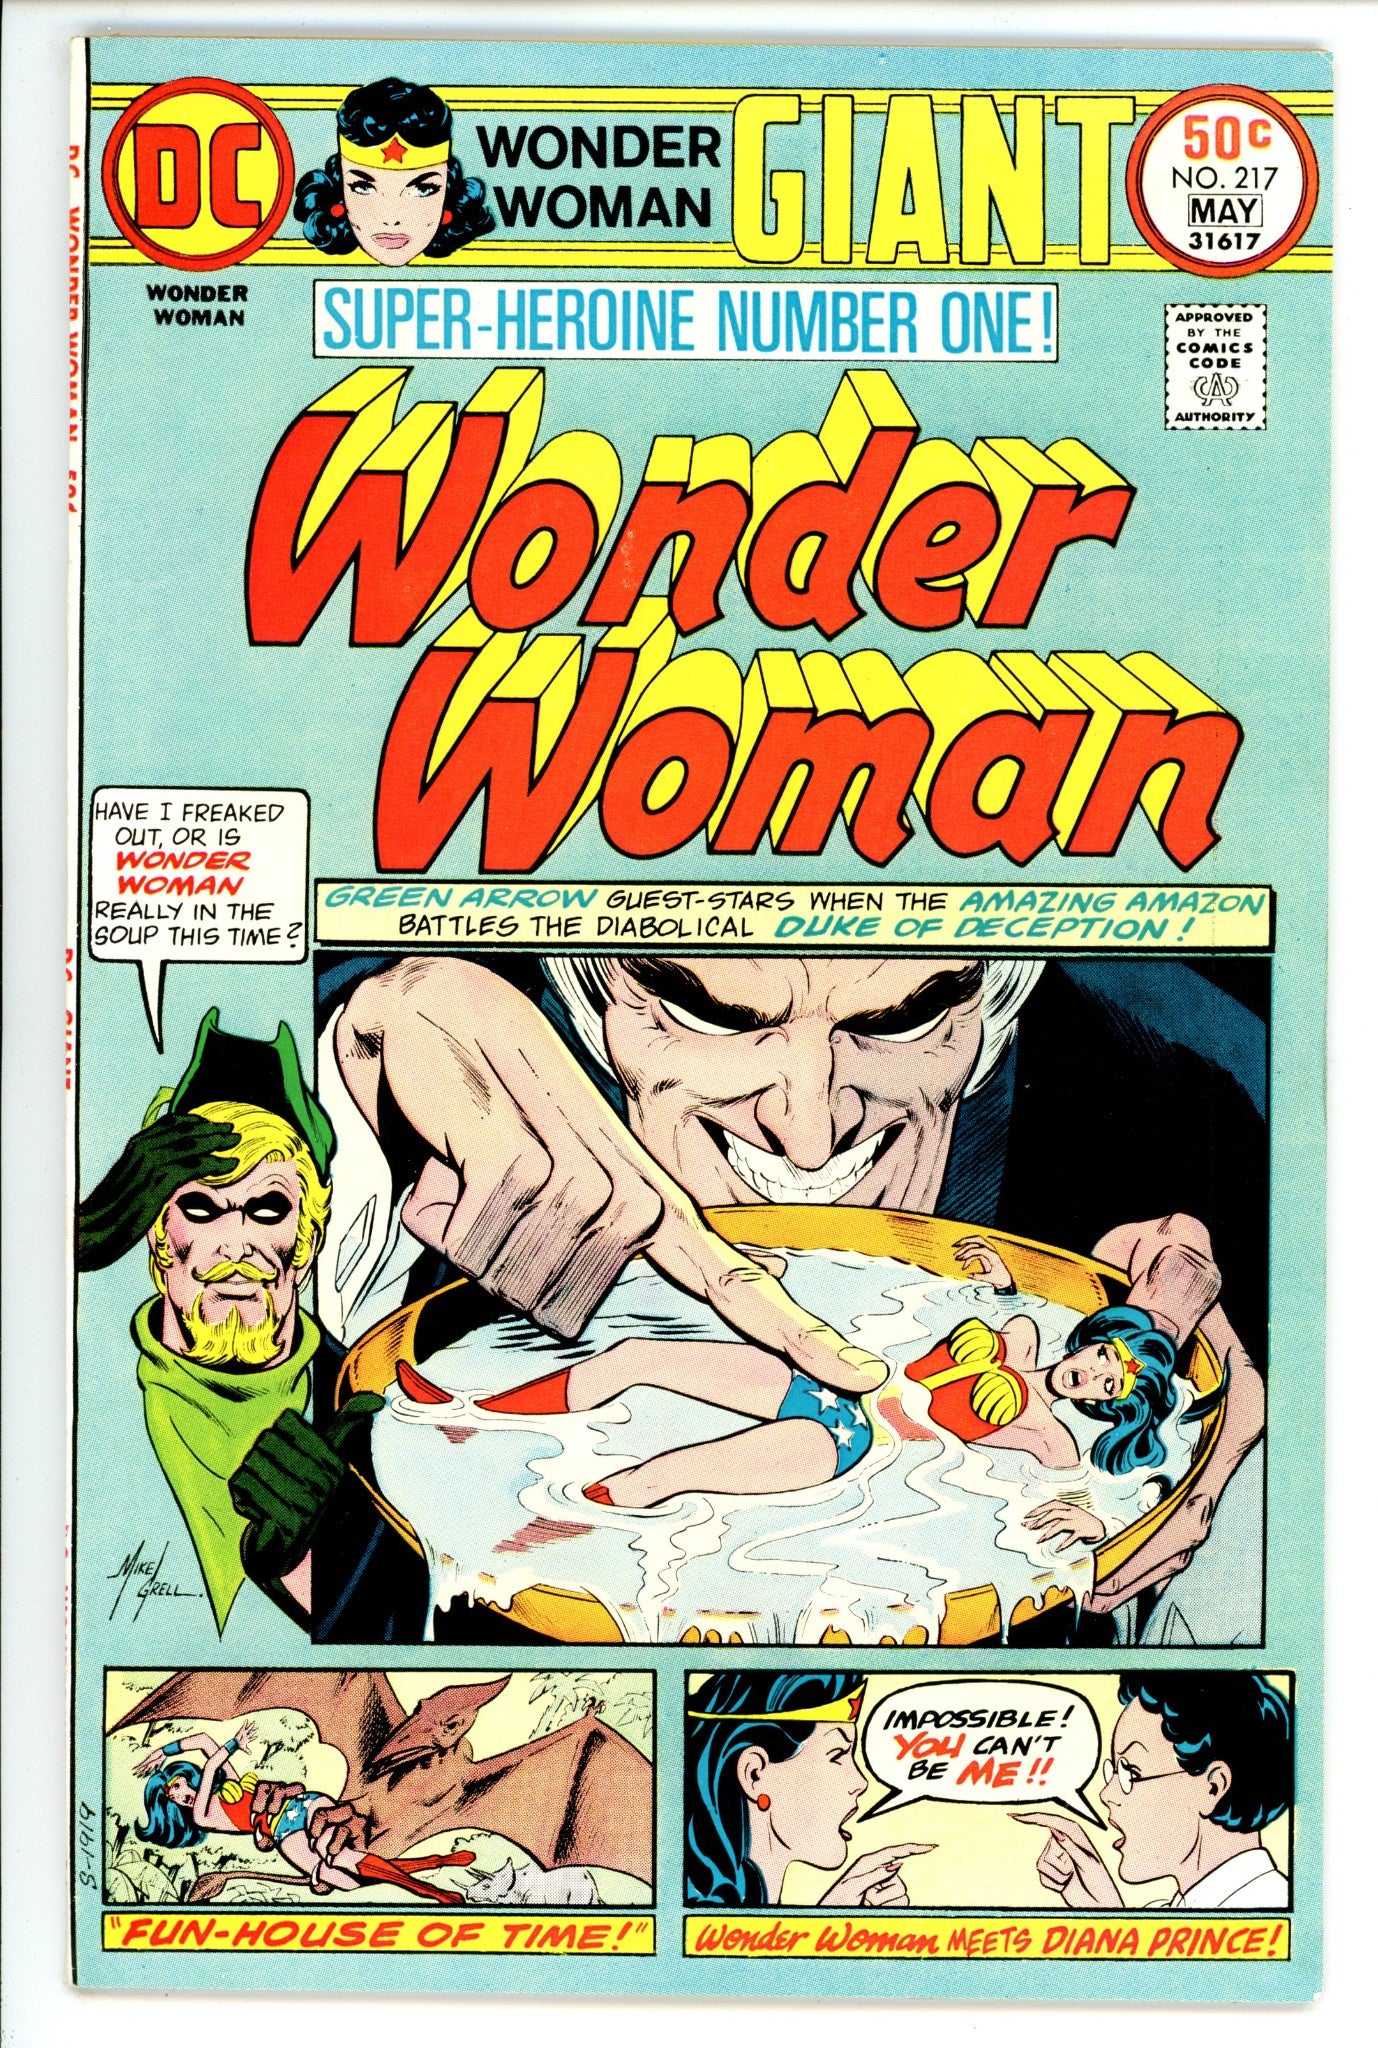 Wonder Woman Vol 1 217 VF/NM (9.0) (1975) 